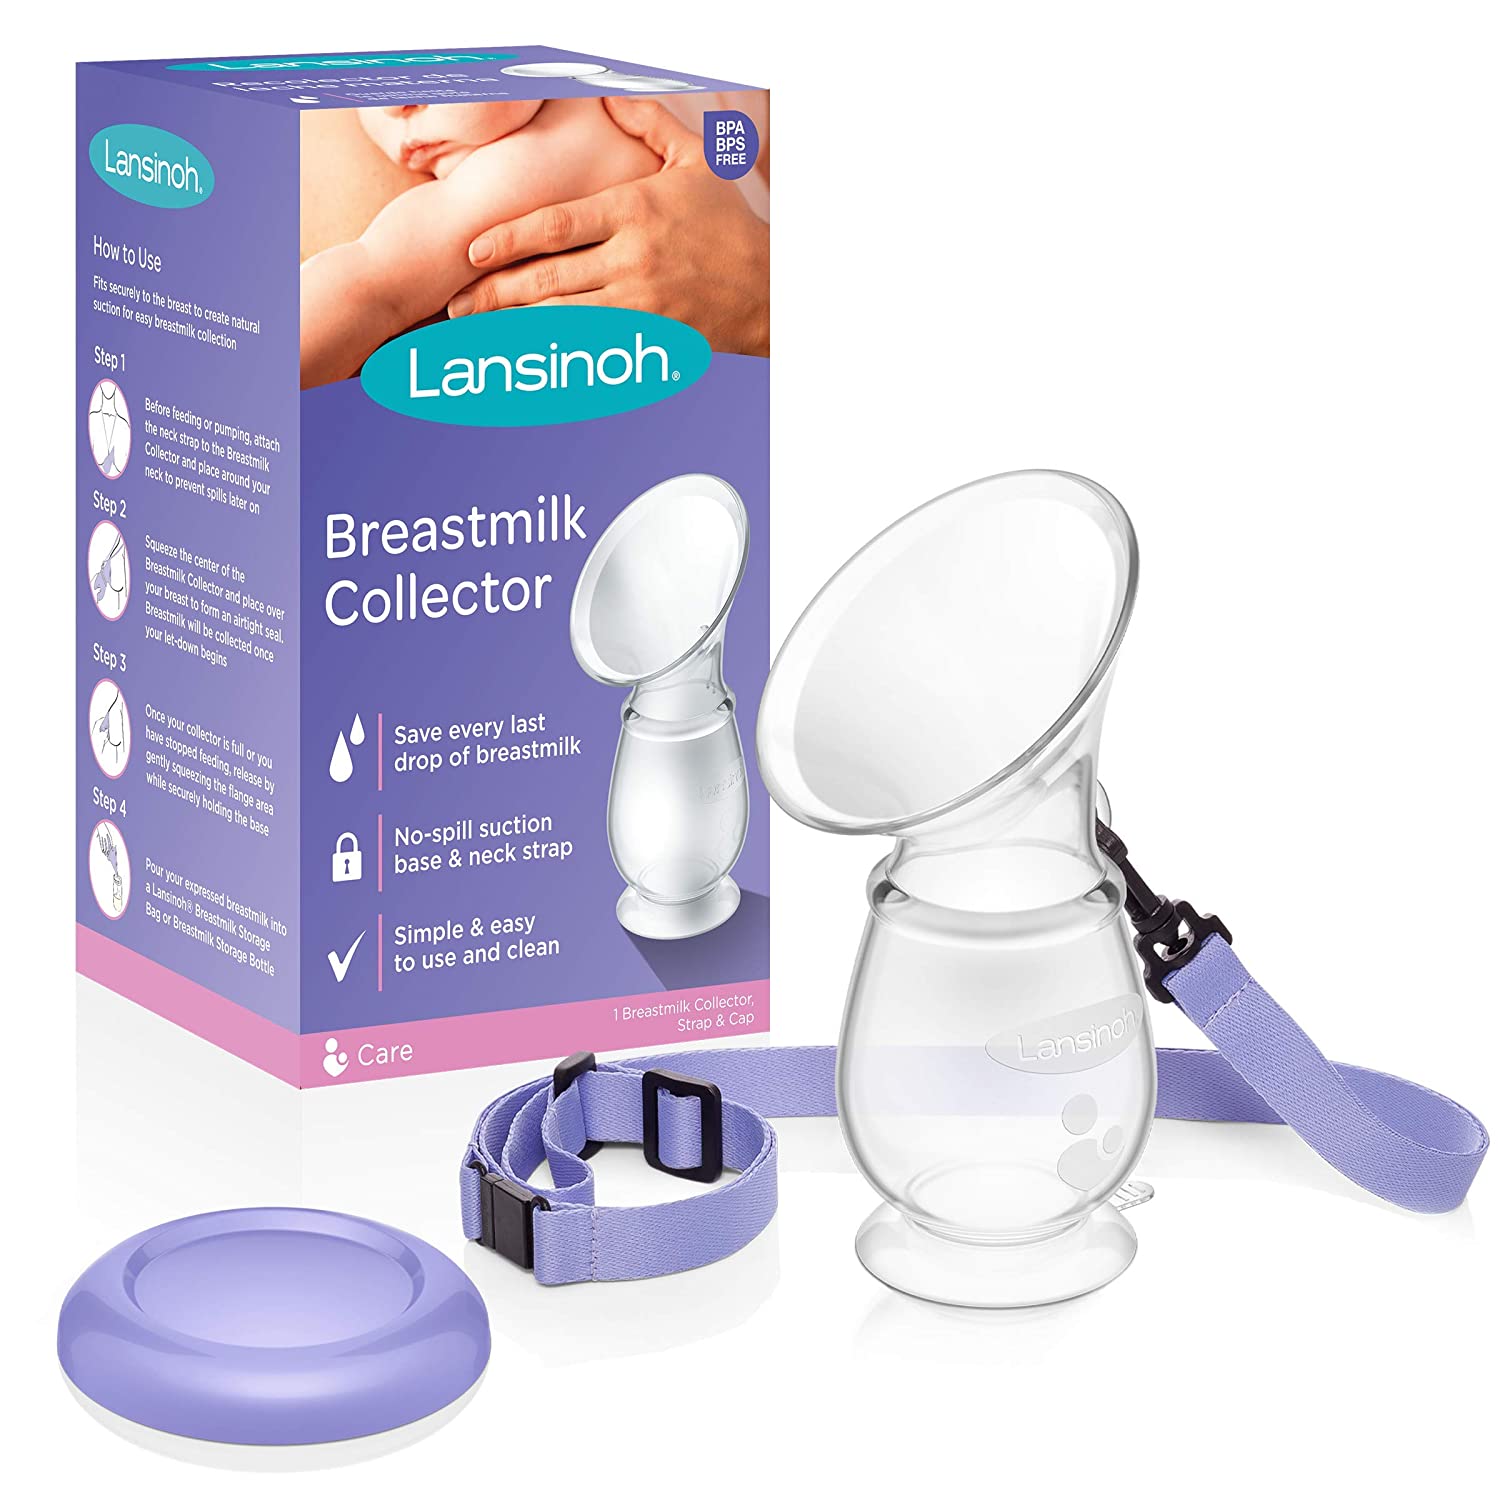 Lansinoh - Breastmilk Collector